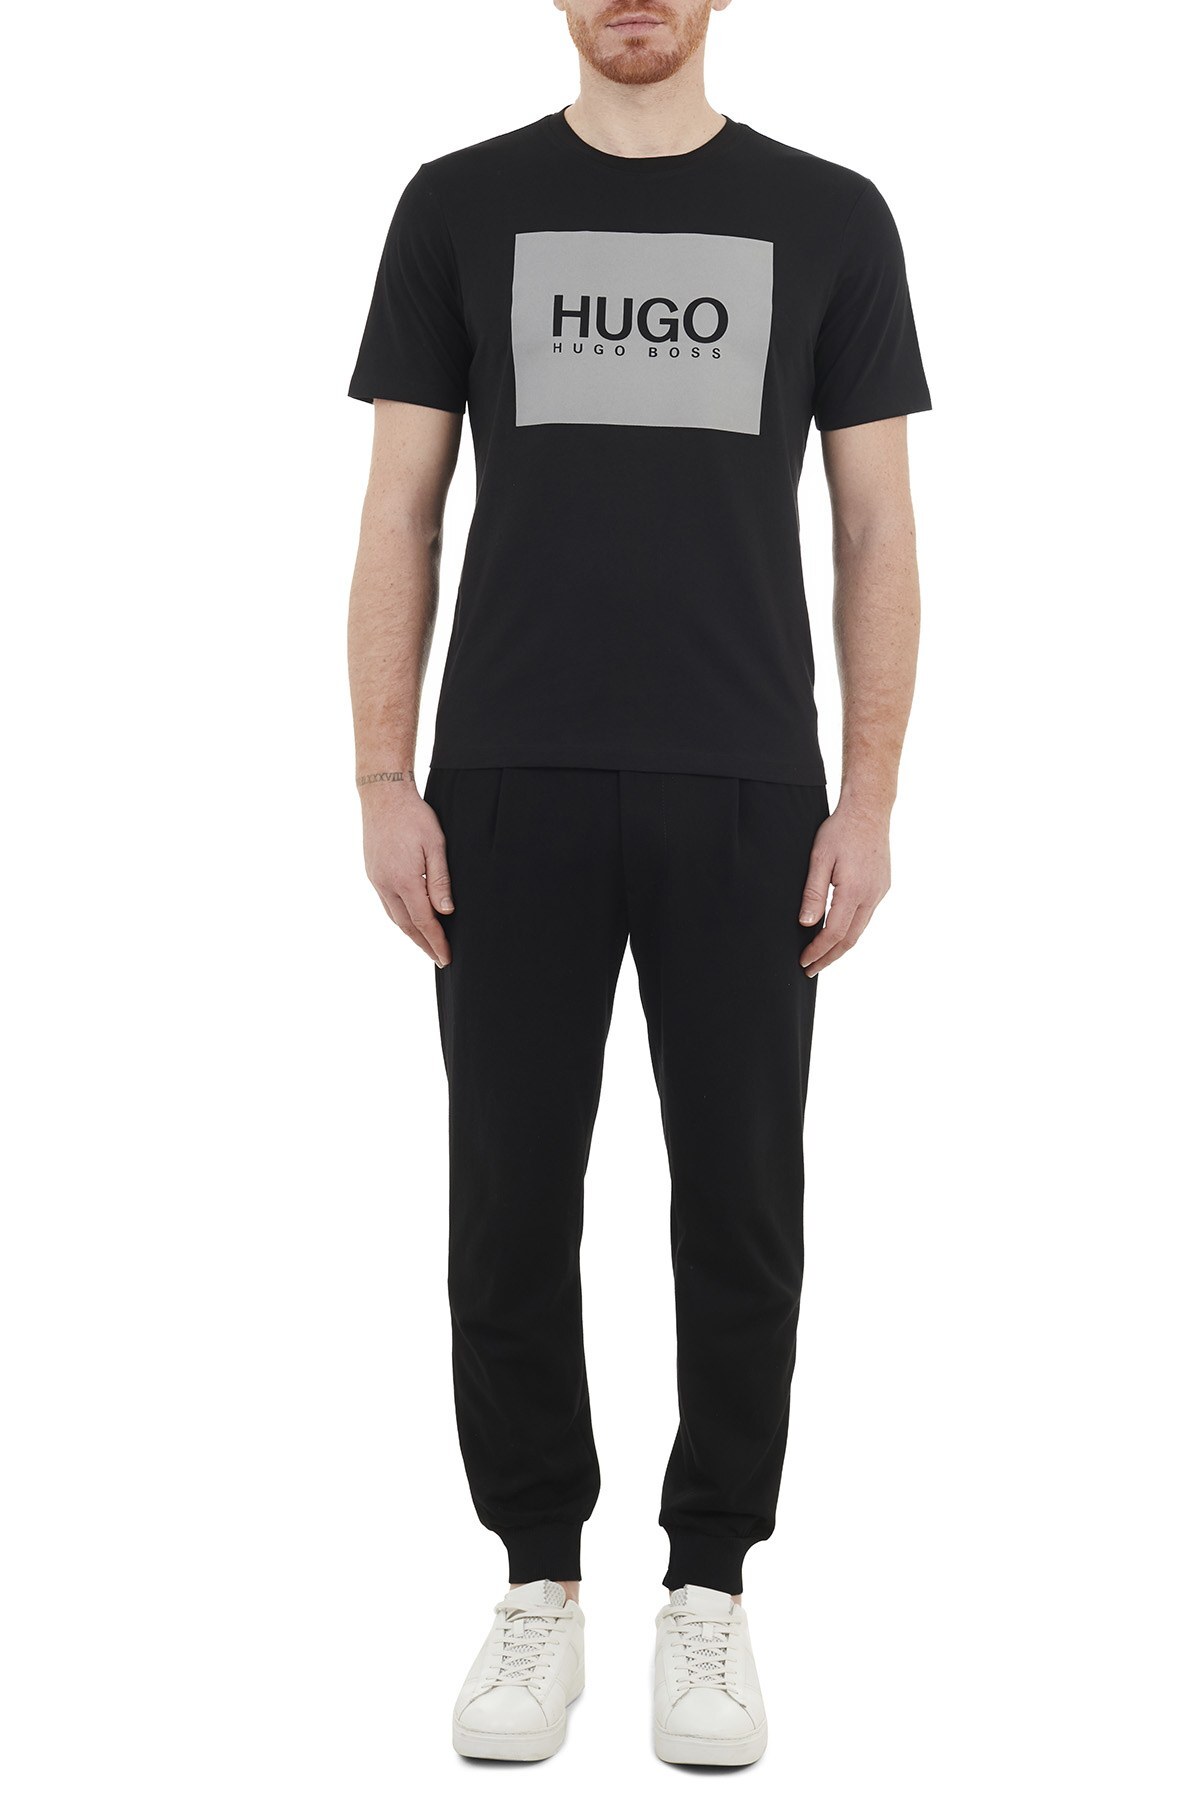 Hugo Boss Regular Fit Baskılı Bisiklet Yaka % 100 Pamuk Erkek T Shirt 50442929 001 SİYAH